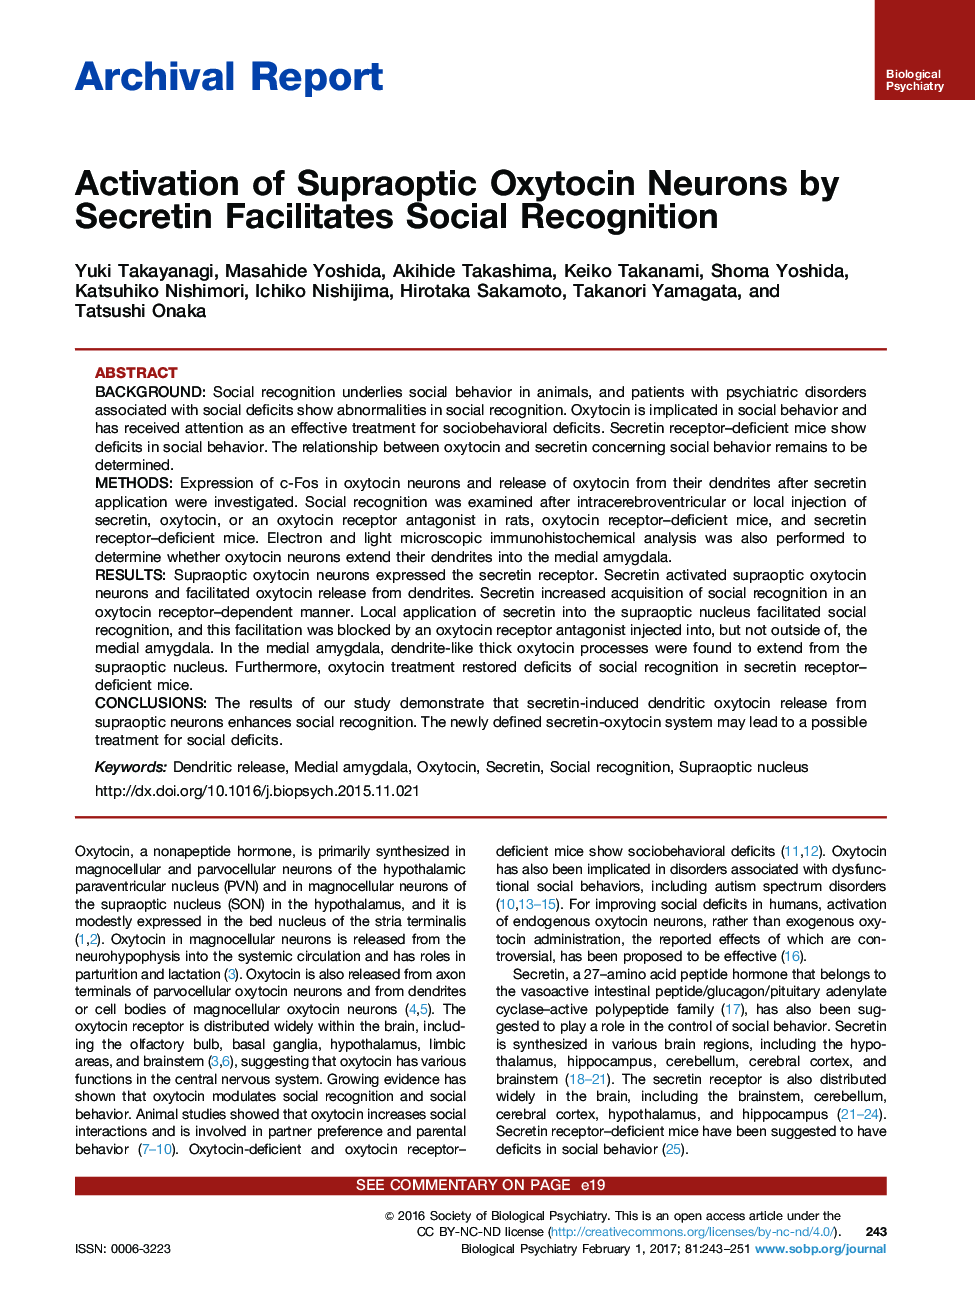 Archival ReportActivation of Supraoptic Oxytocin Neurons by Secretin Facilitates Social Recognition